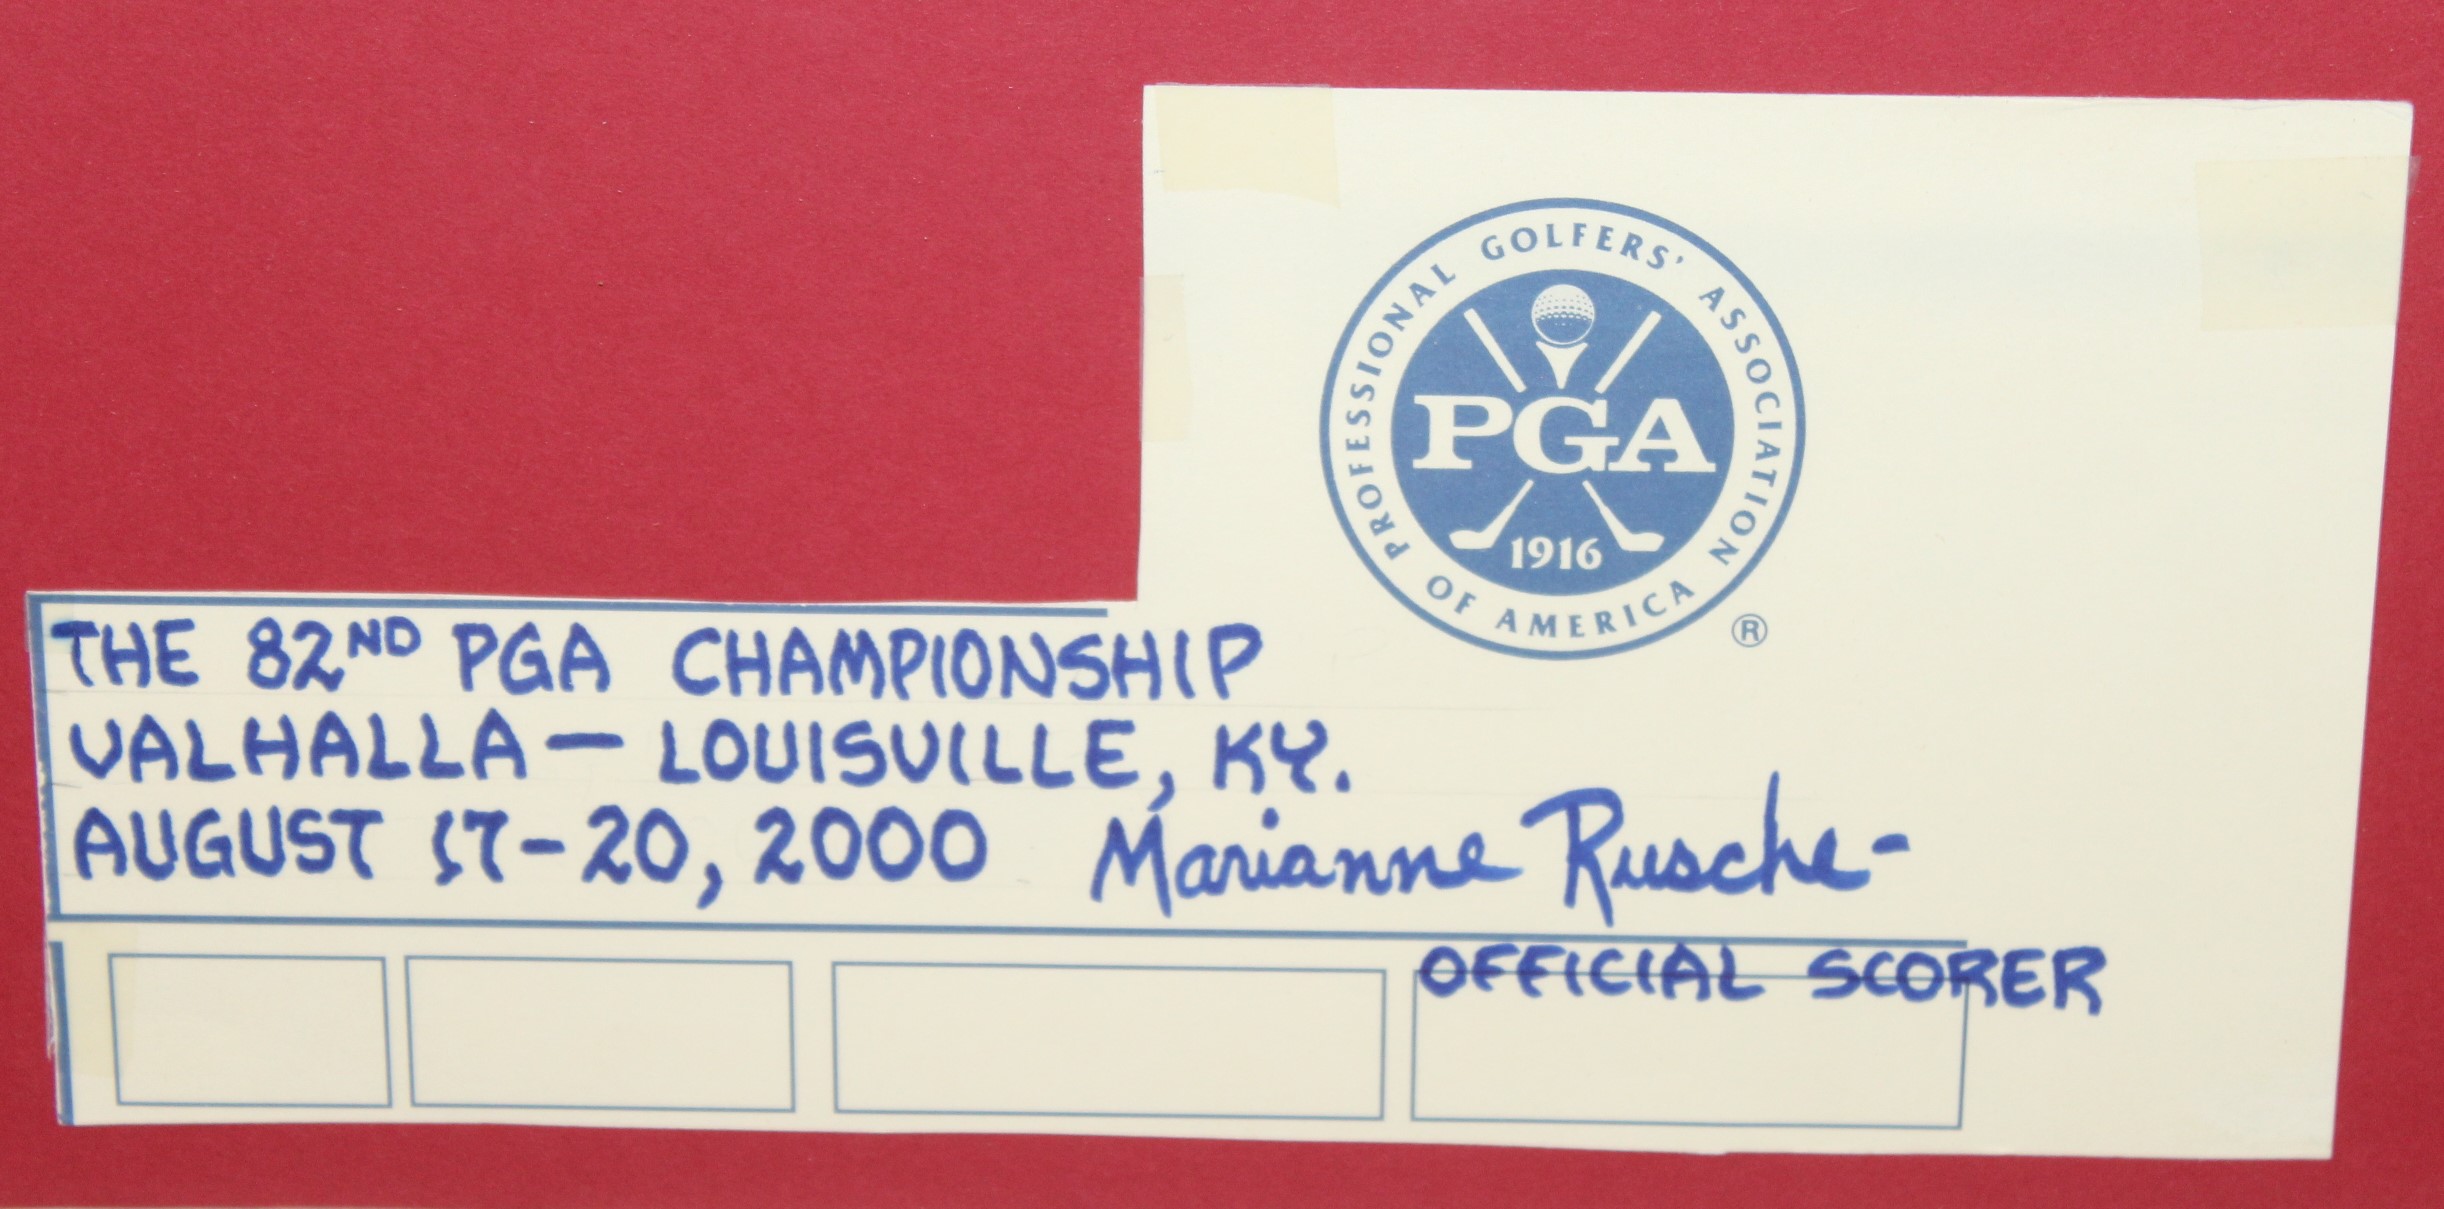 Lot Detail - Actual Scoreboard/Leaderboard from Tiger Woods 2000 PGA